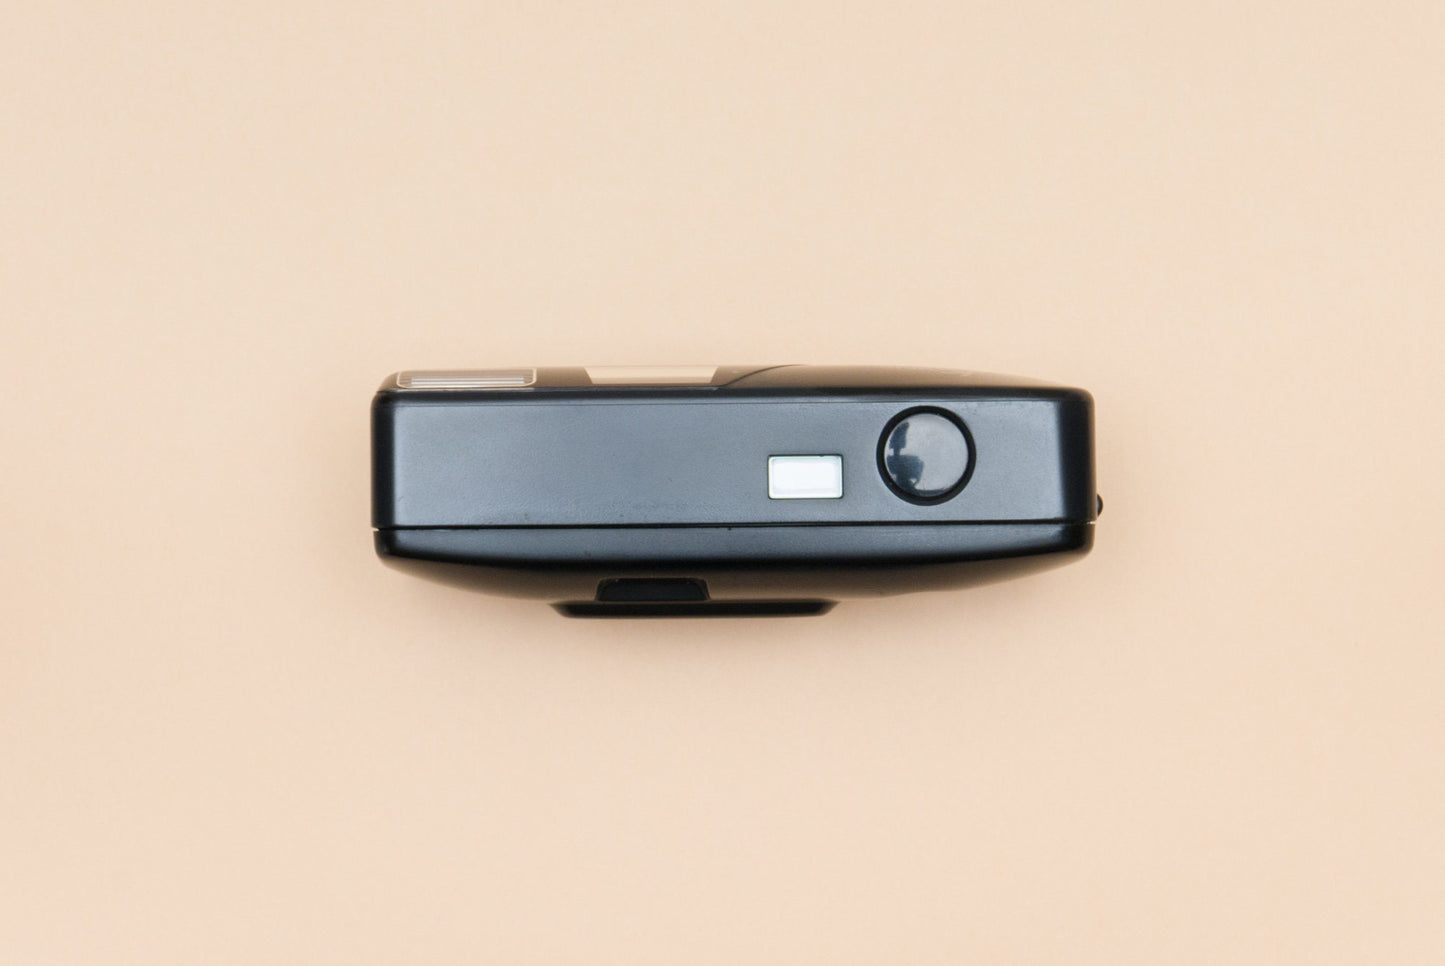 Konica K-mini EU-mini Compact 35mm Point and Shoot Film Camera